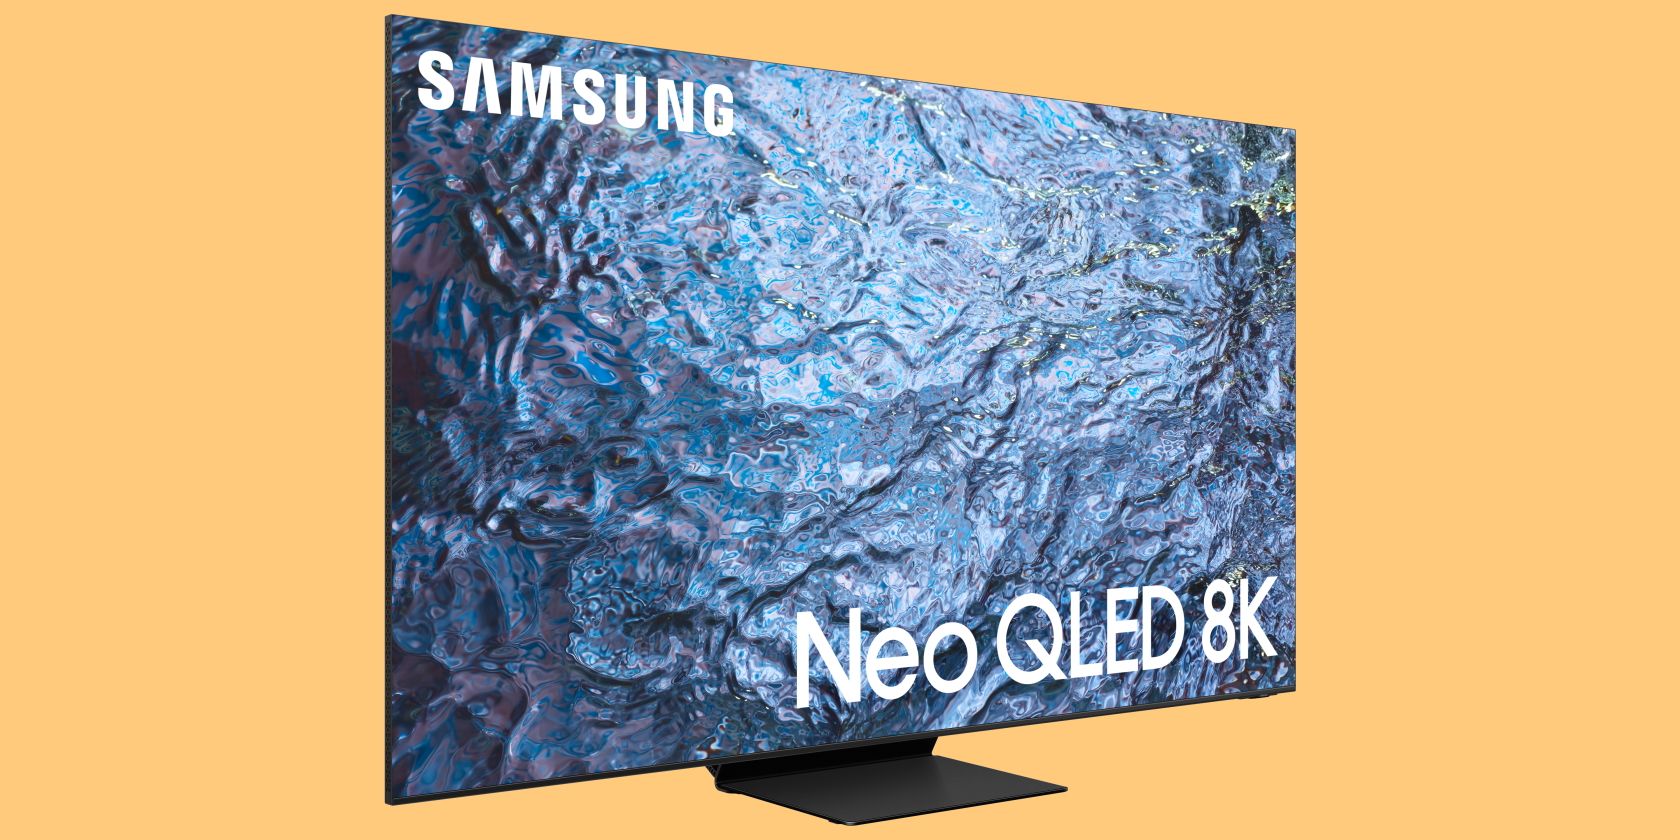 Samsung Neo QLED 8K TV promo image